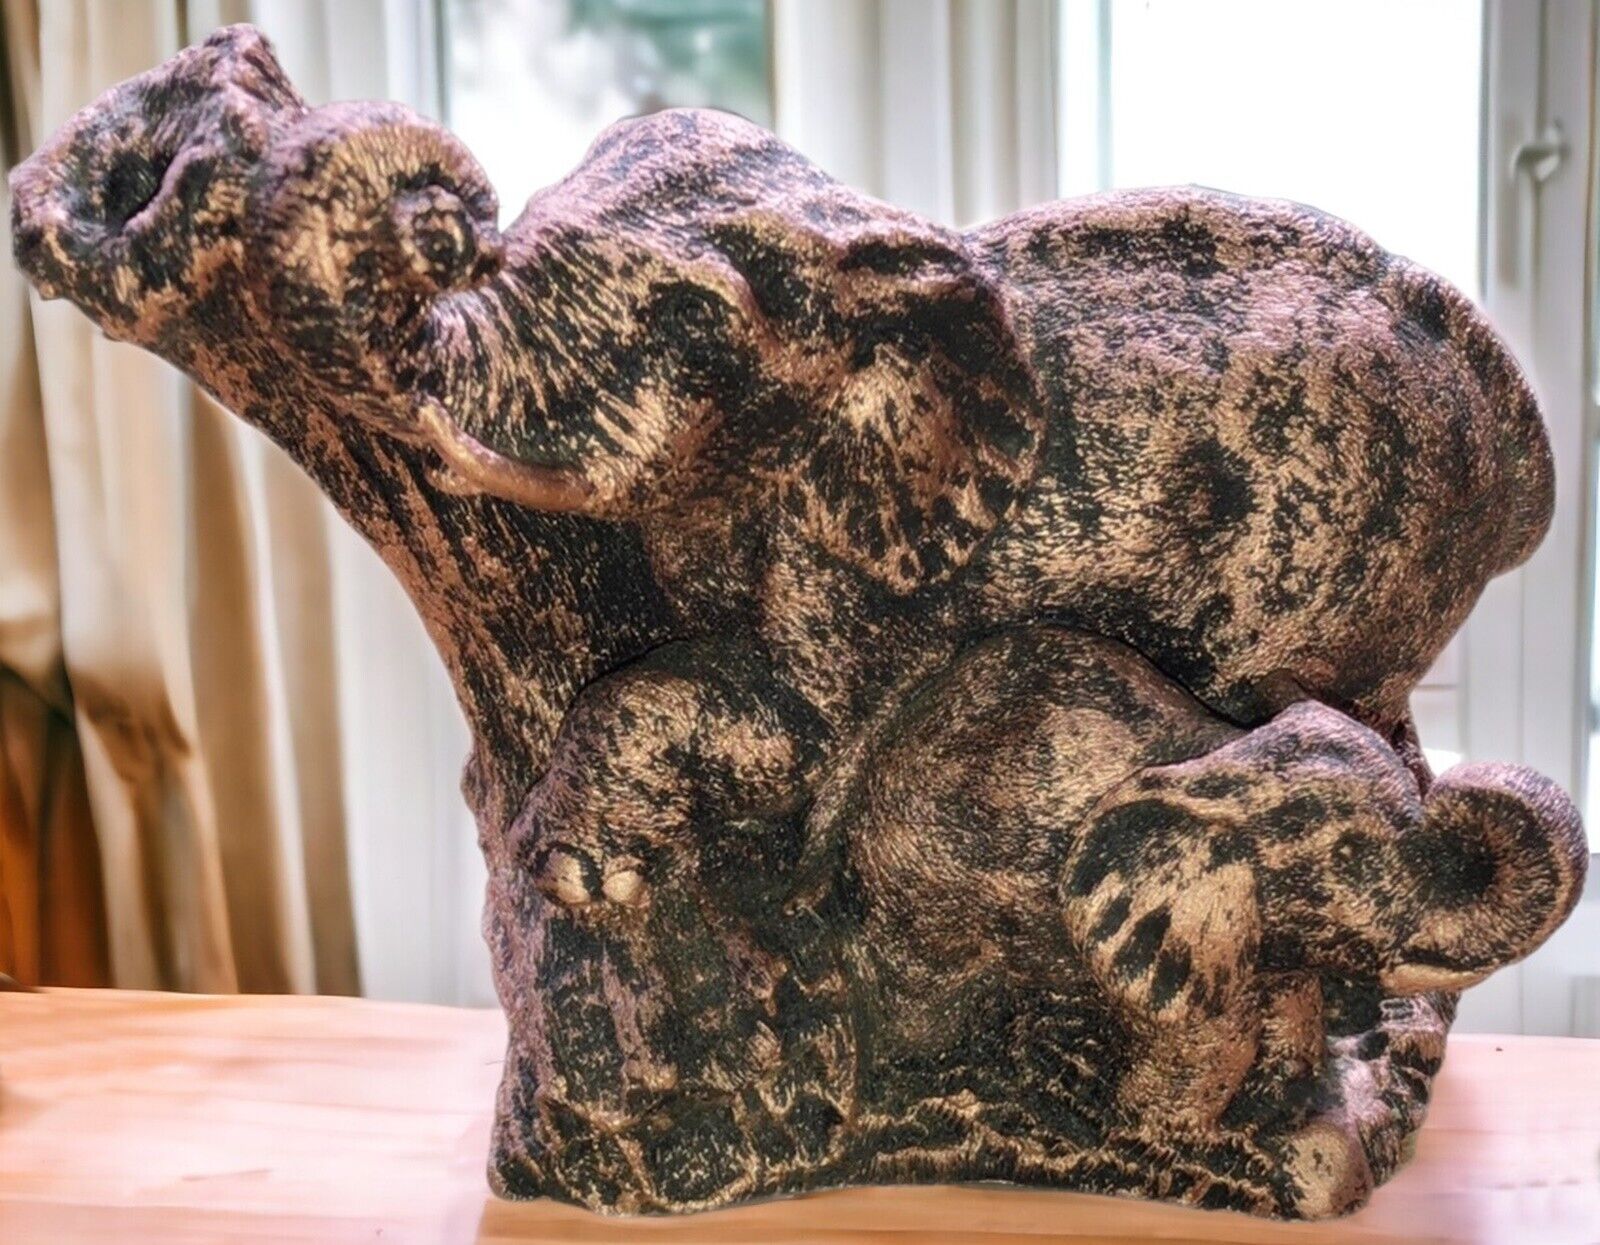 1.5 lb. Elephant Figurine Sculpture 1.5 lb Plaster/Polystone ?